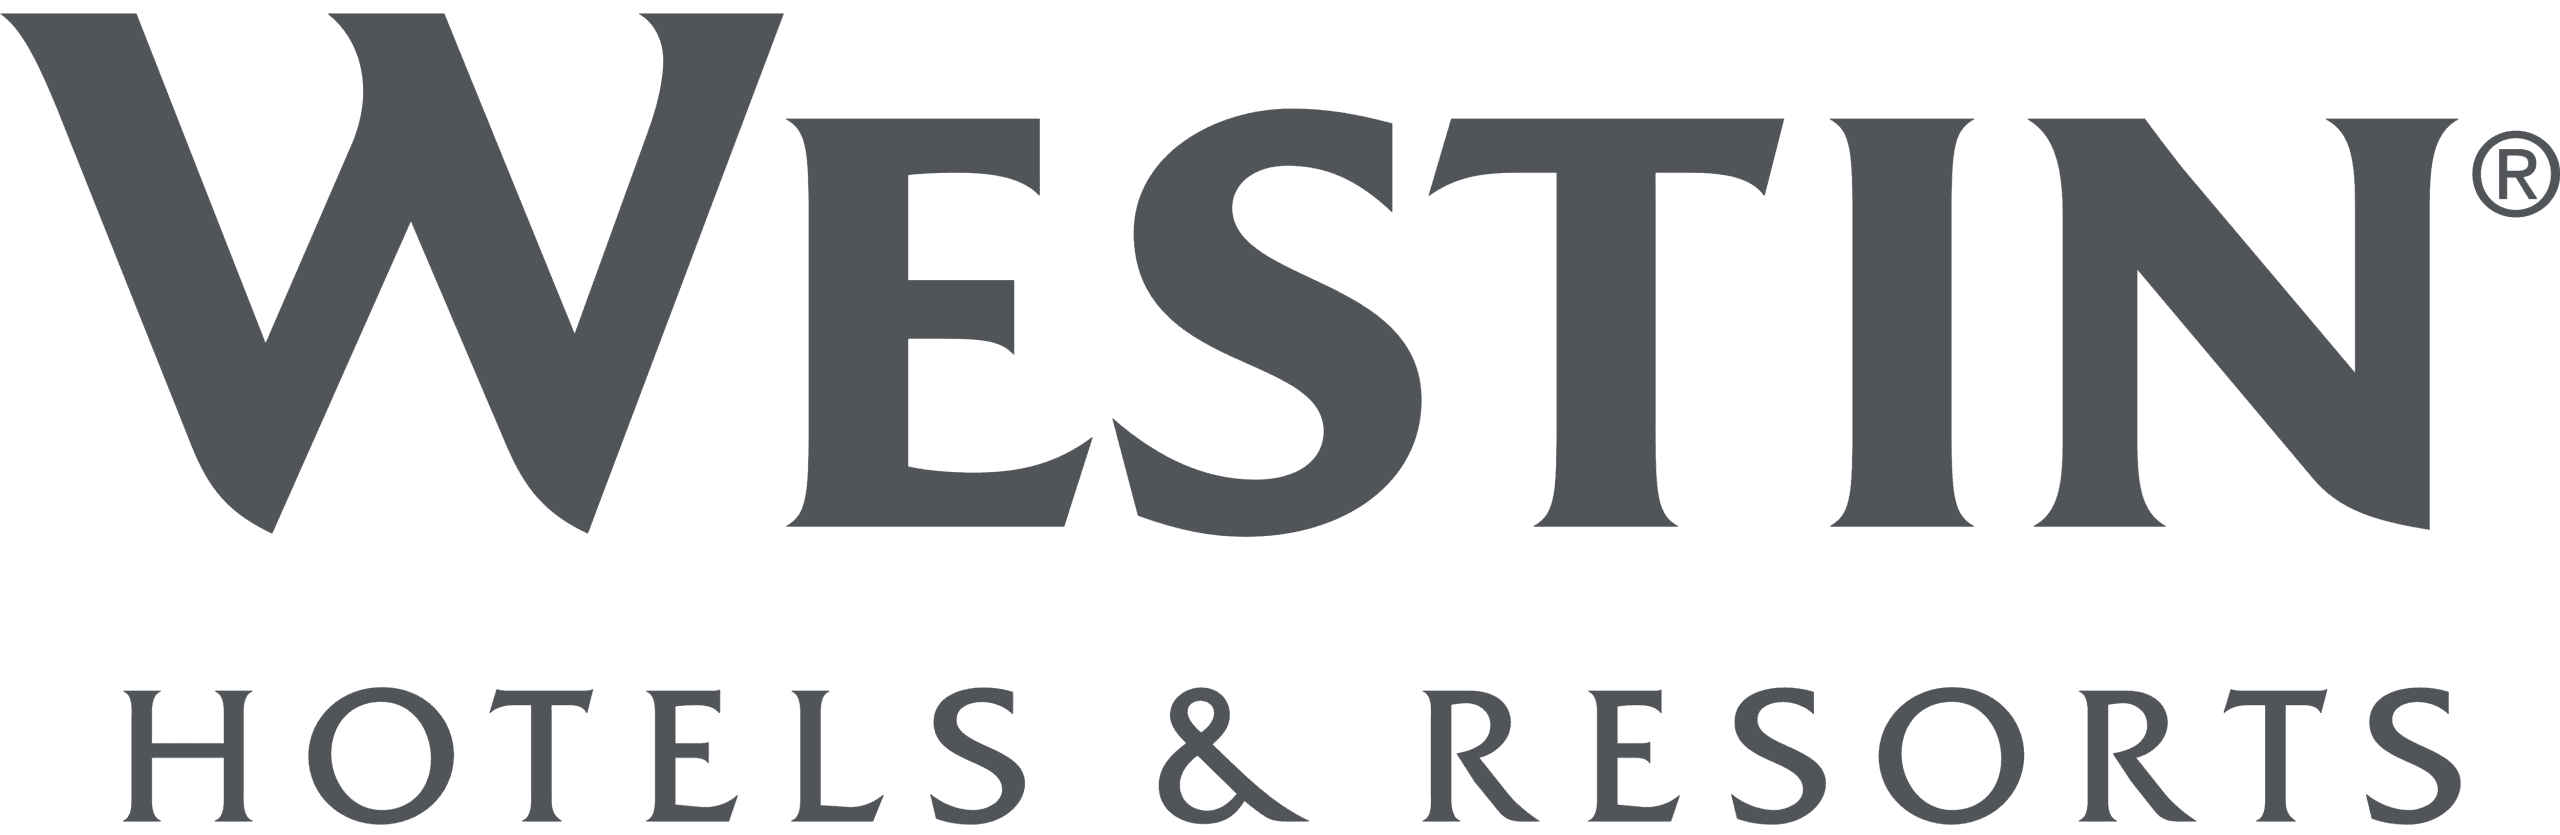 Westin_Hotels_and_Resorts_logo